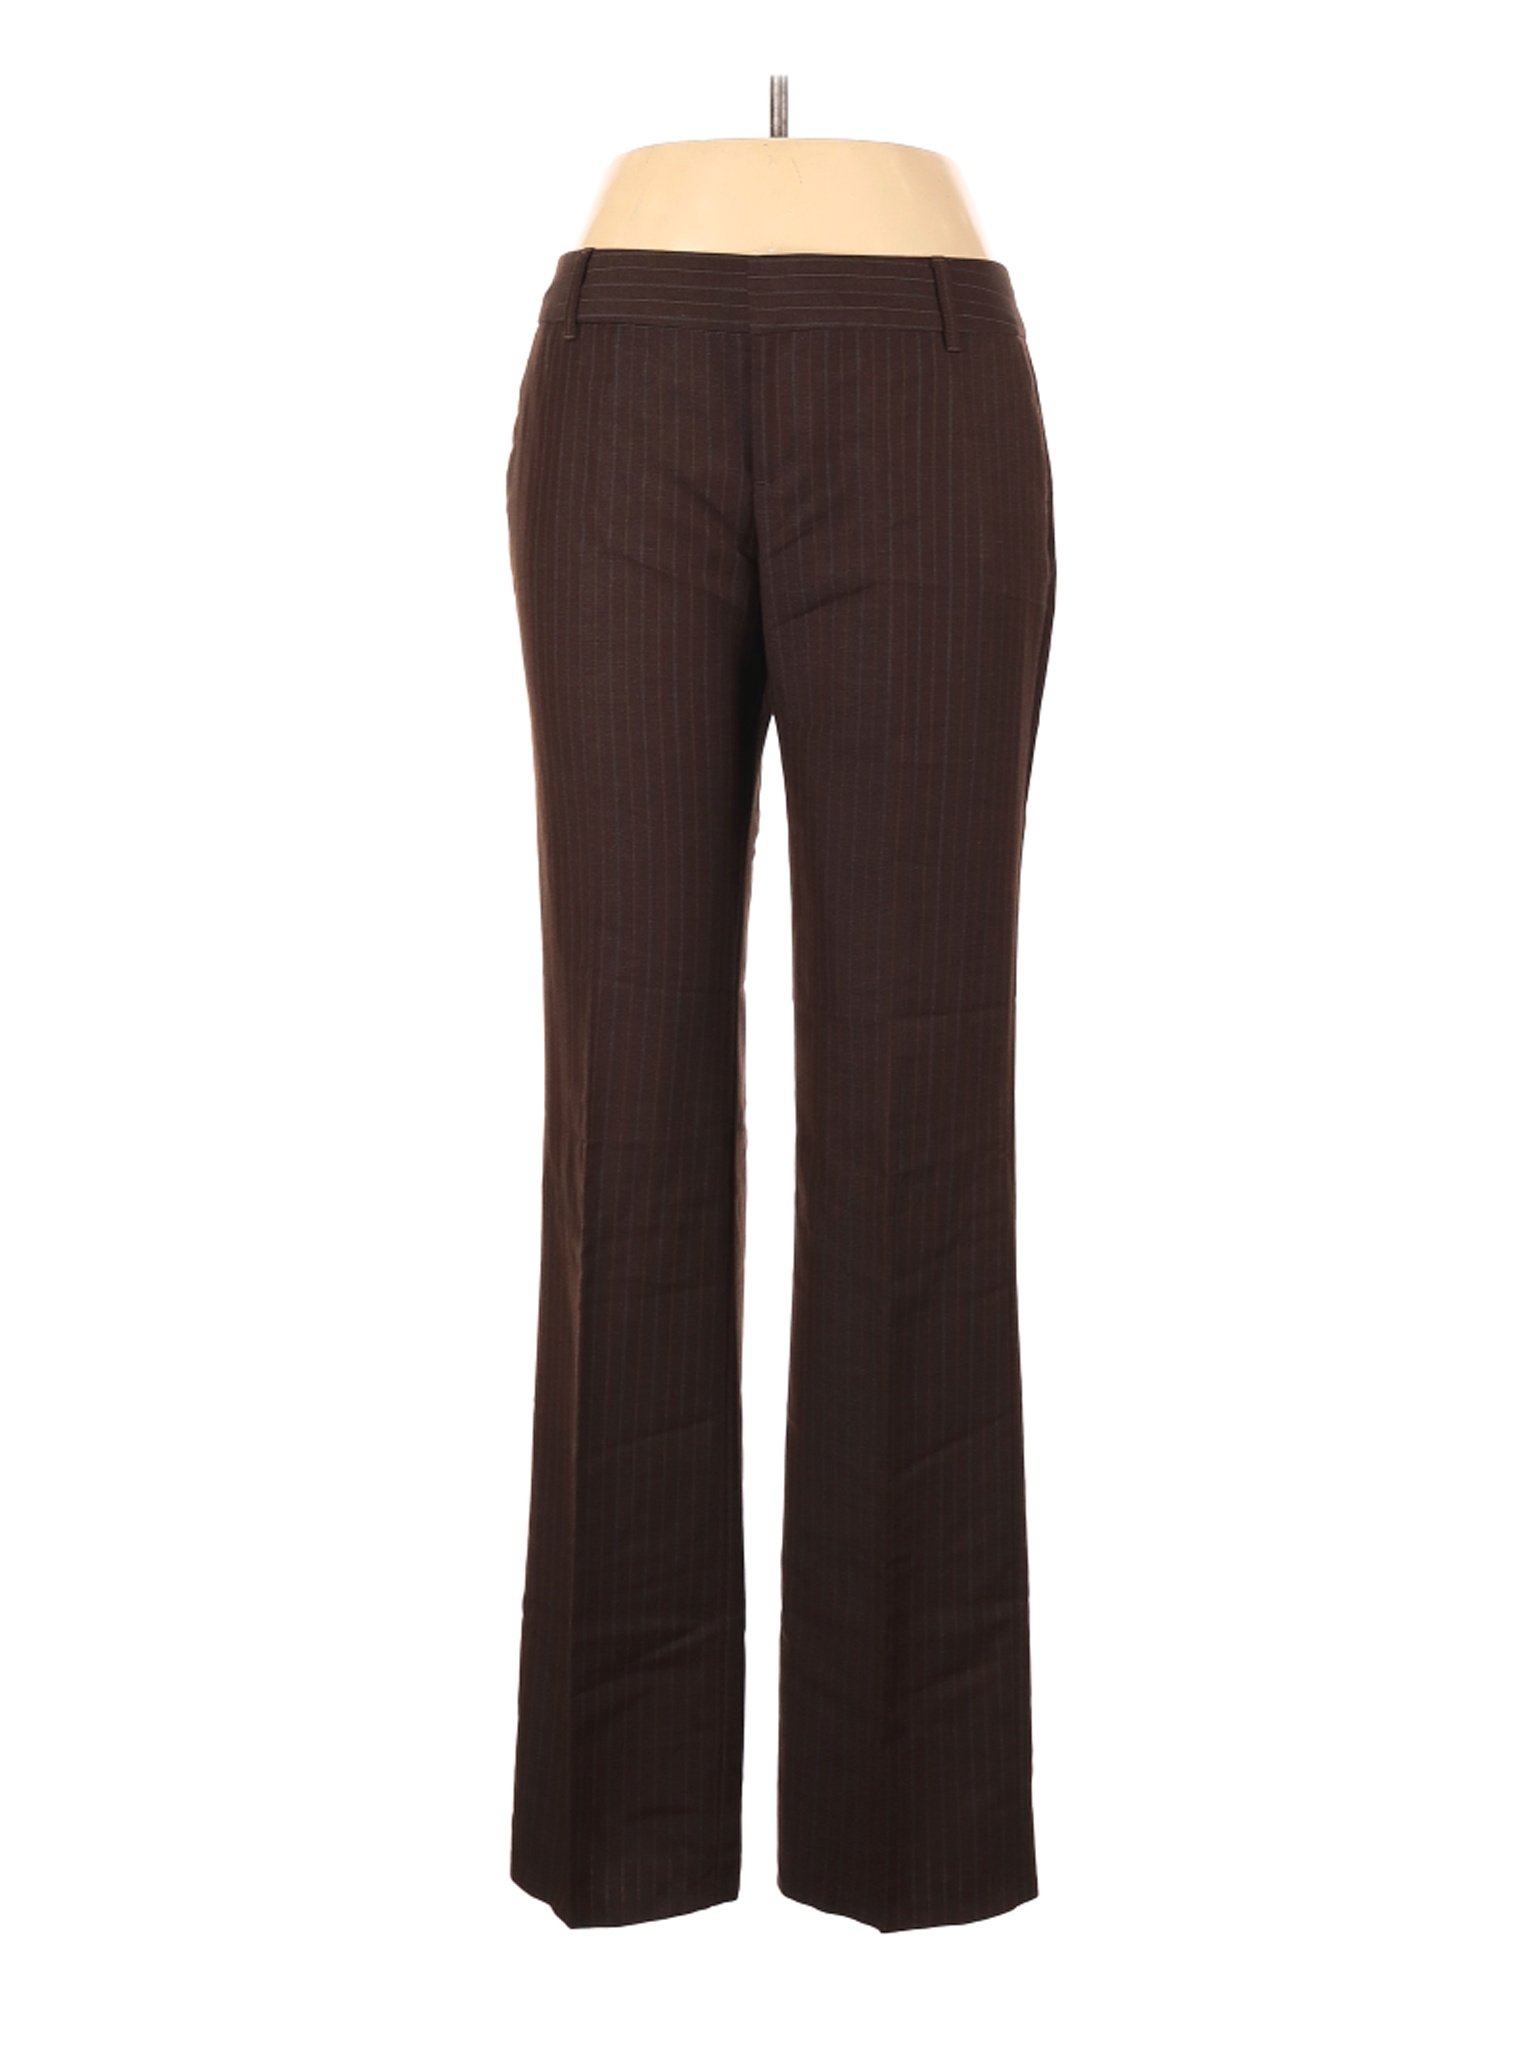 Old Navy Women Brown Dress Pants 10 | eBay